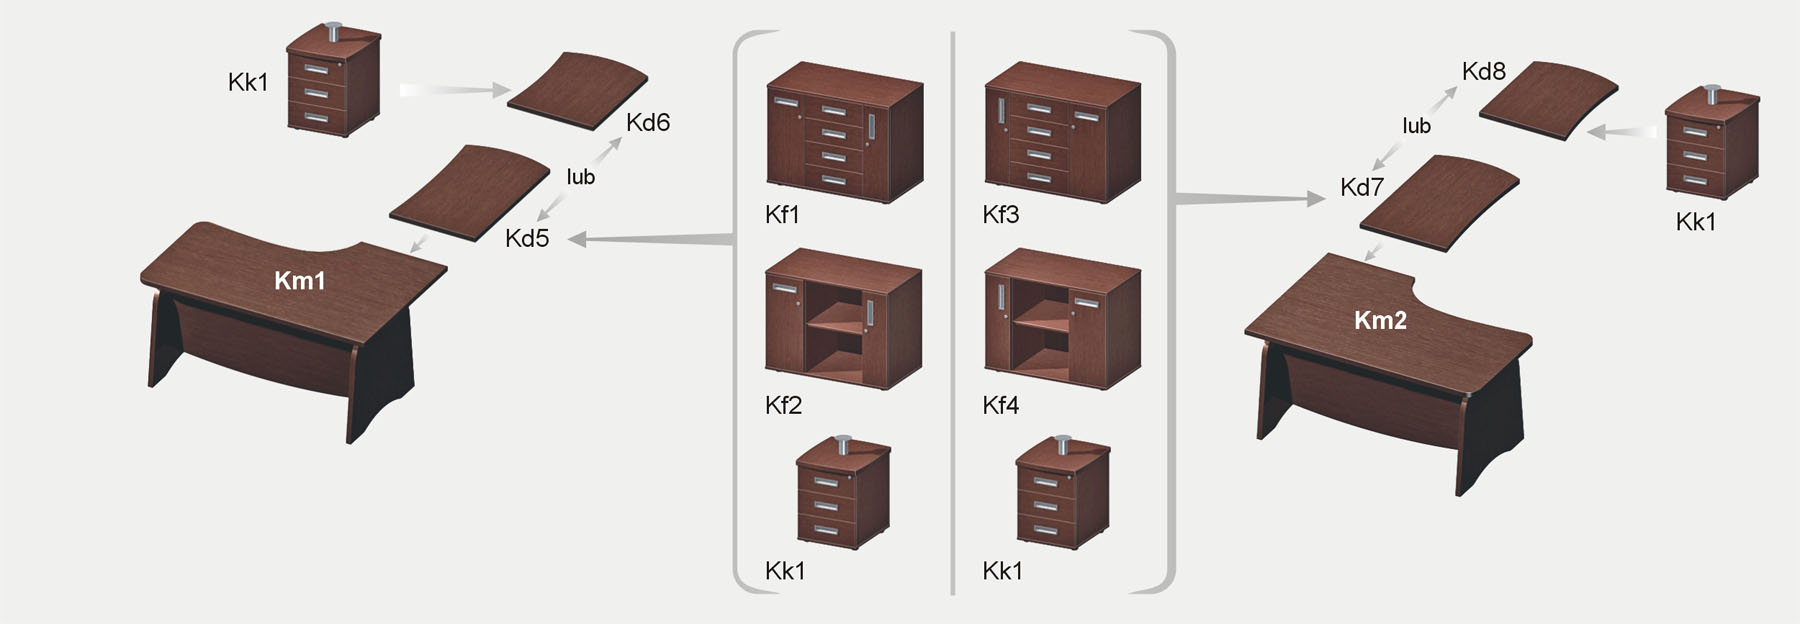 biurka gabinetowe Km1 i Km2 - konfiguracja